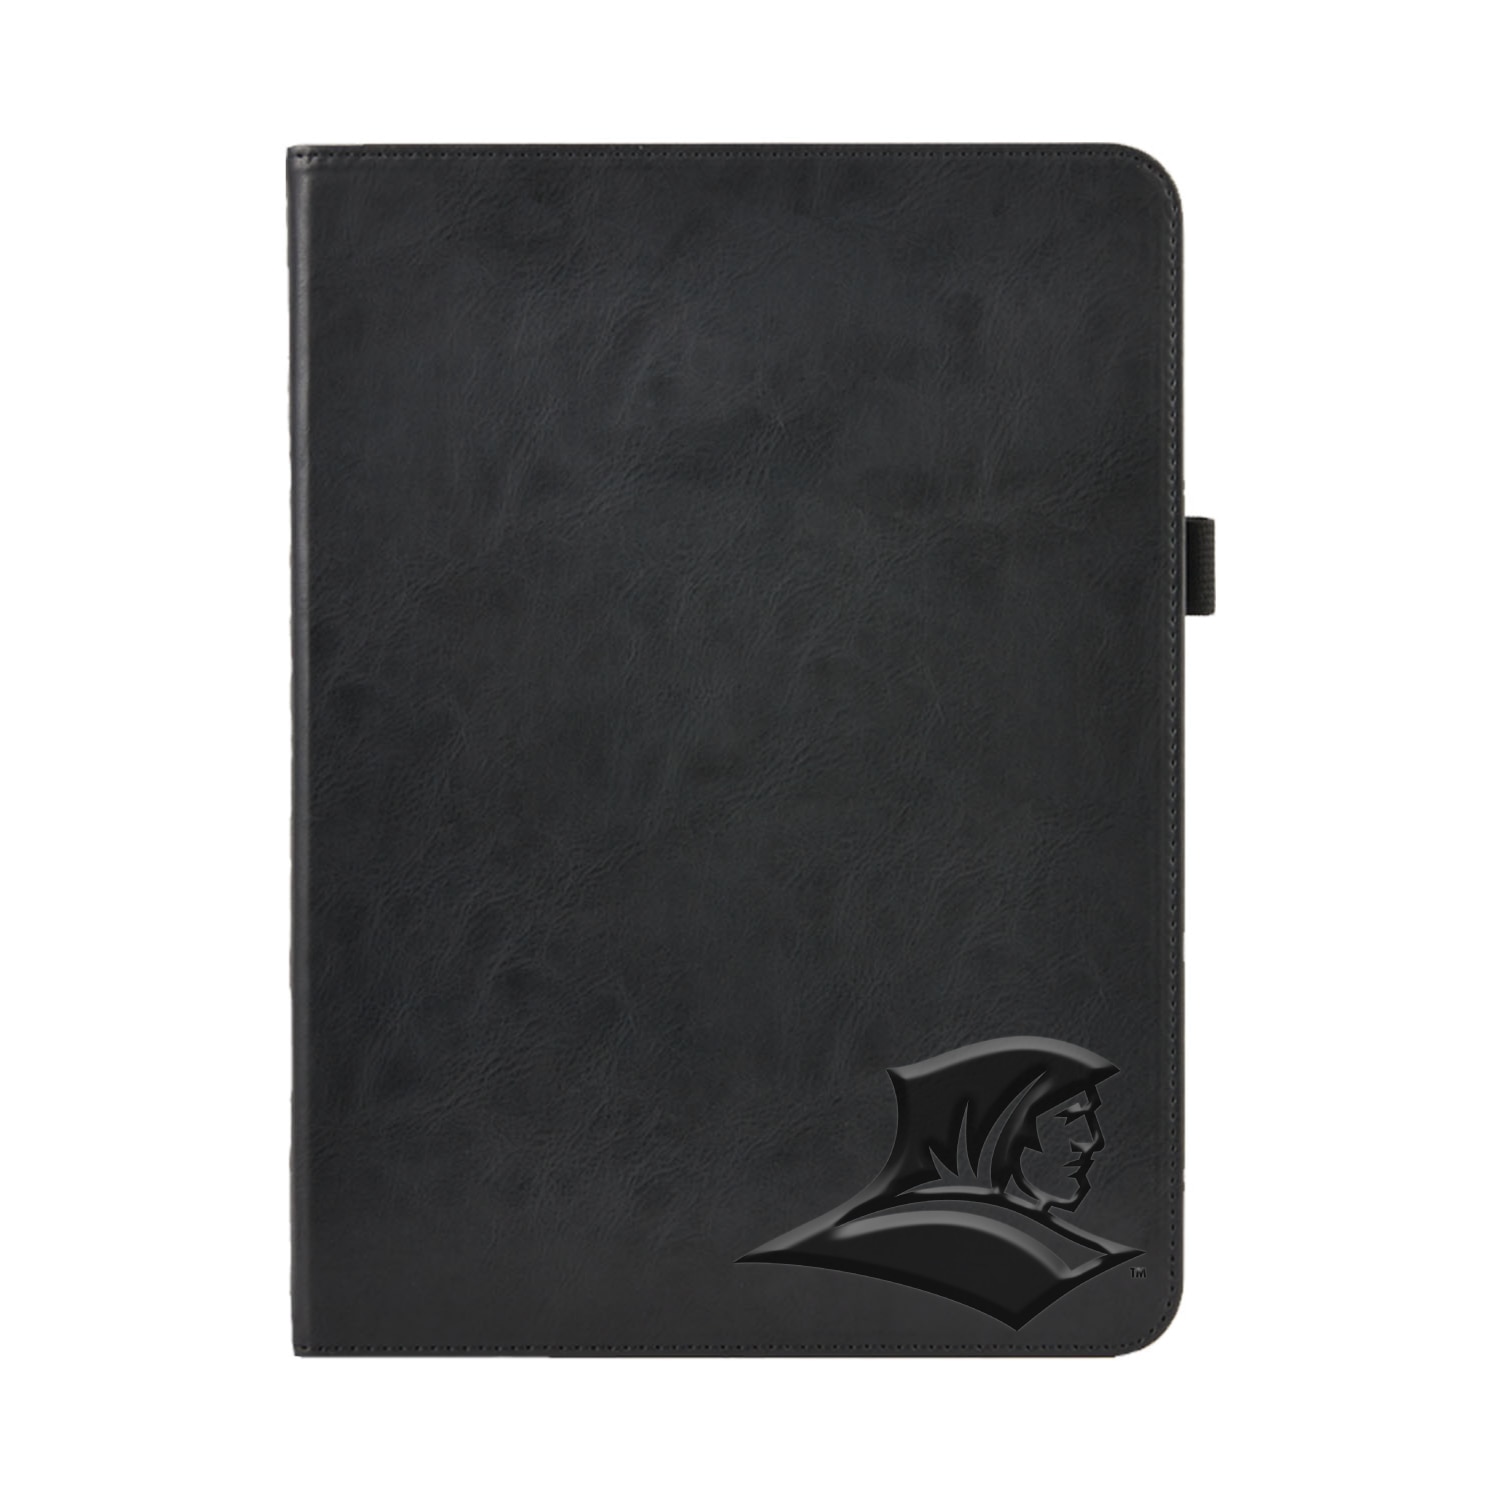 Providence College V2 Black Leather Folio Tablet Case, Alumni V2 - iPad Air (4th gen)